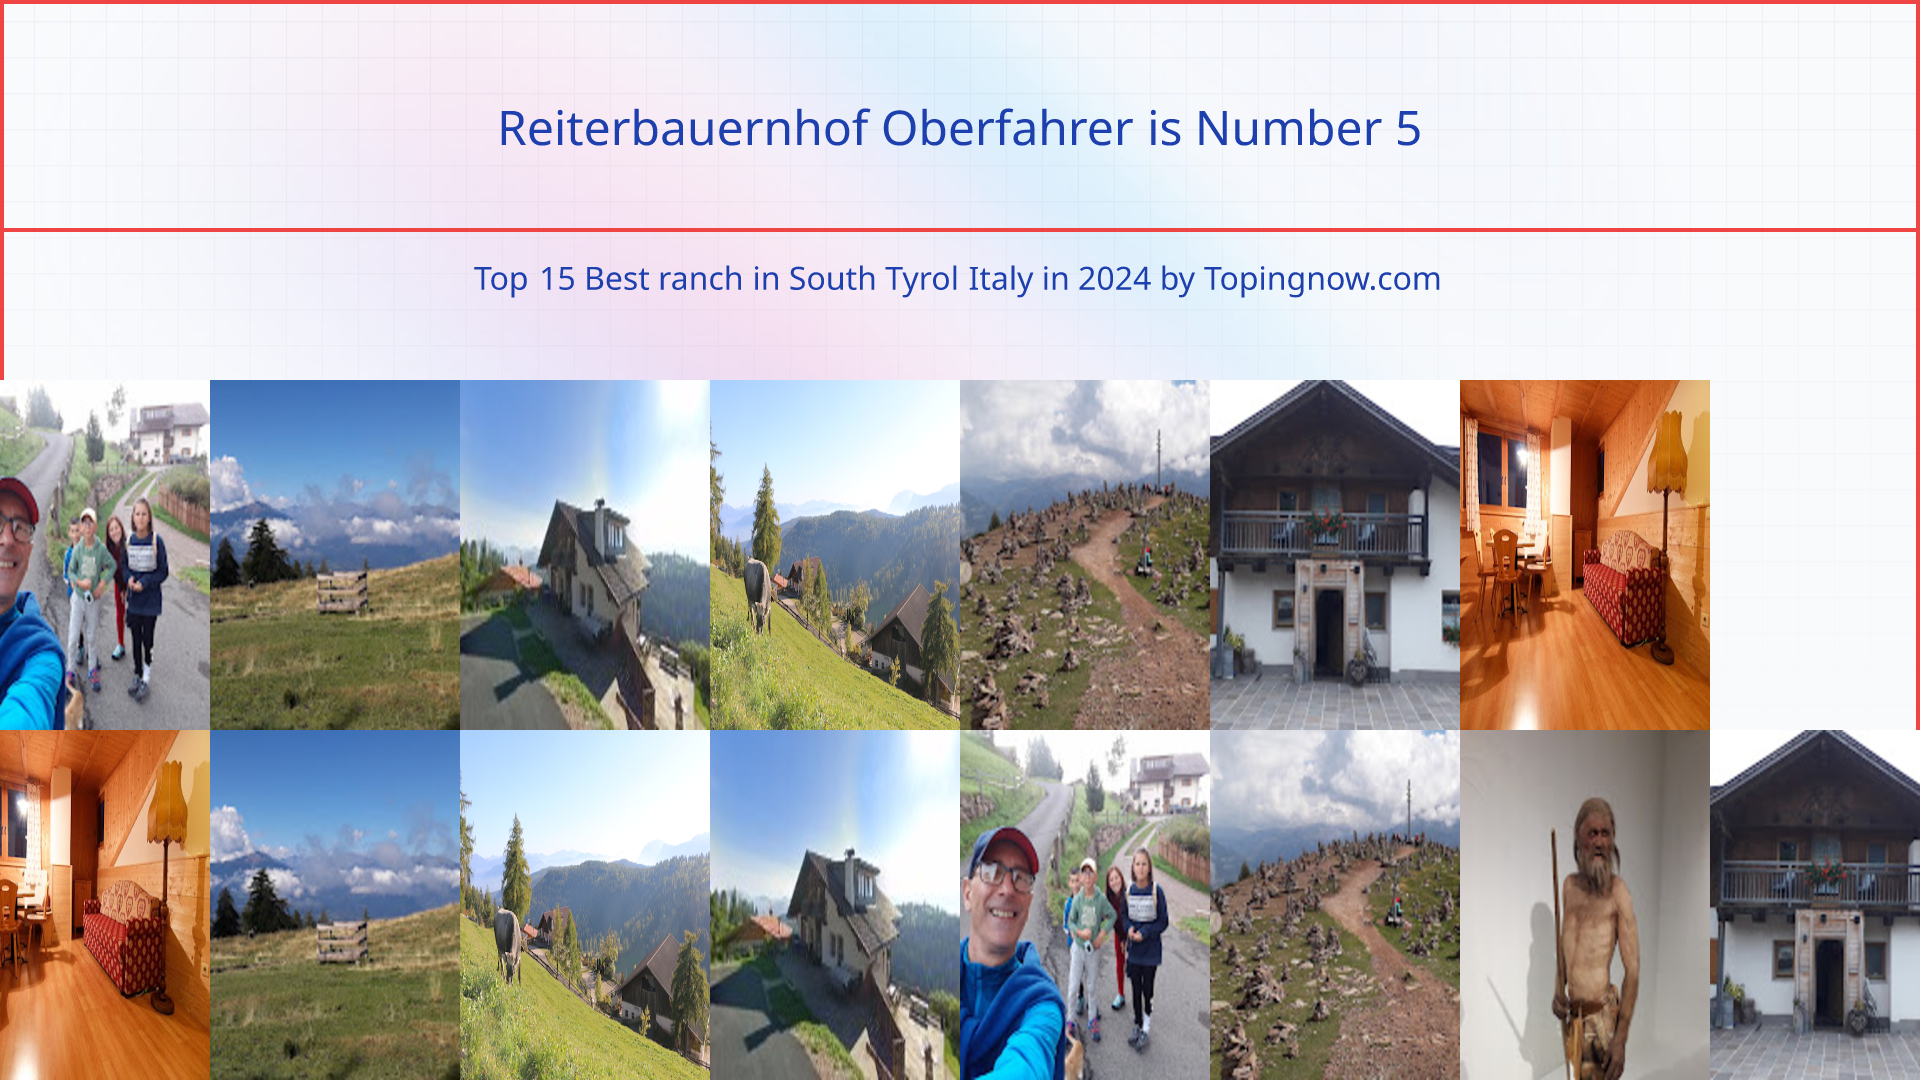 Reiterbauernhof Oberfahrer: Top 15 Best ranch in South Tyrol Italy in 2024